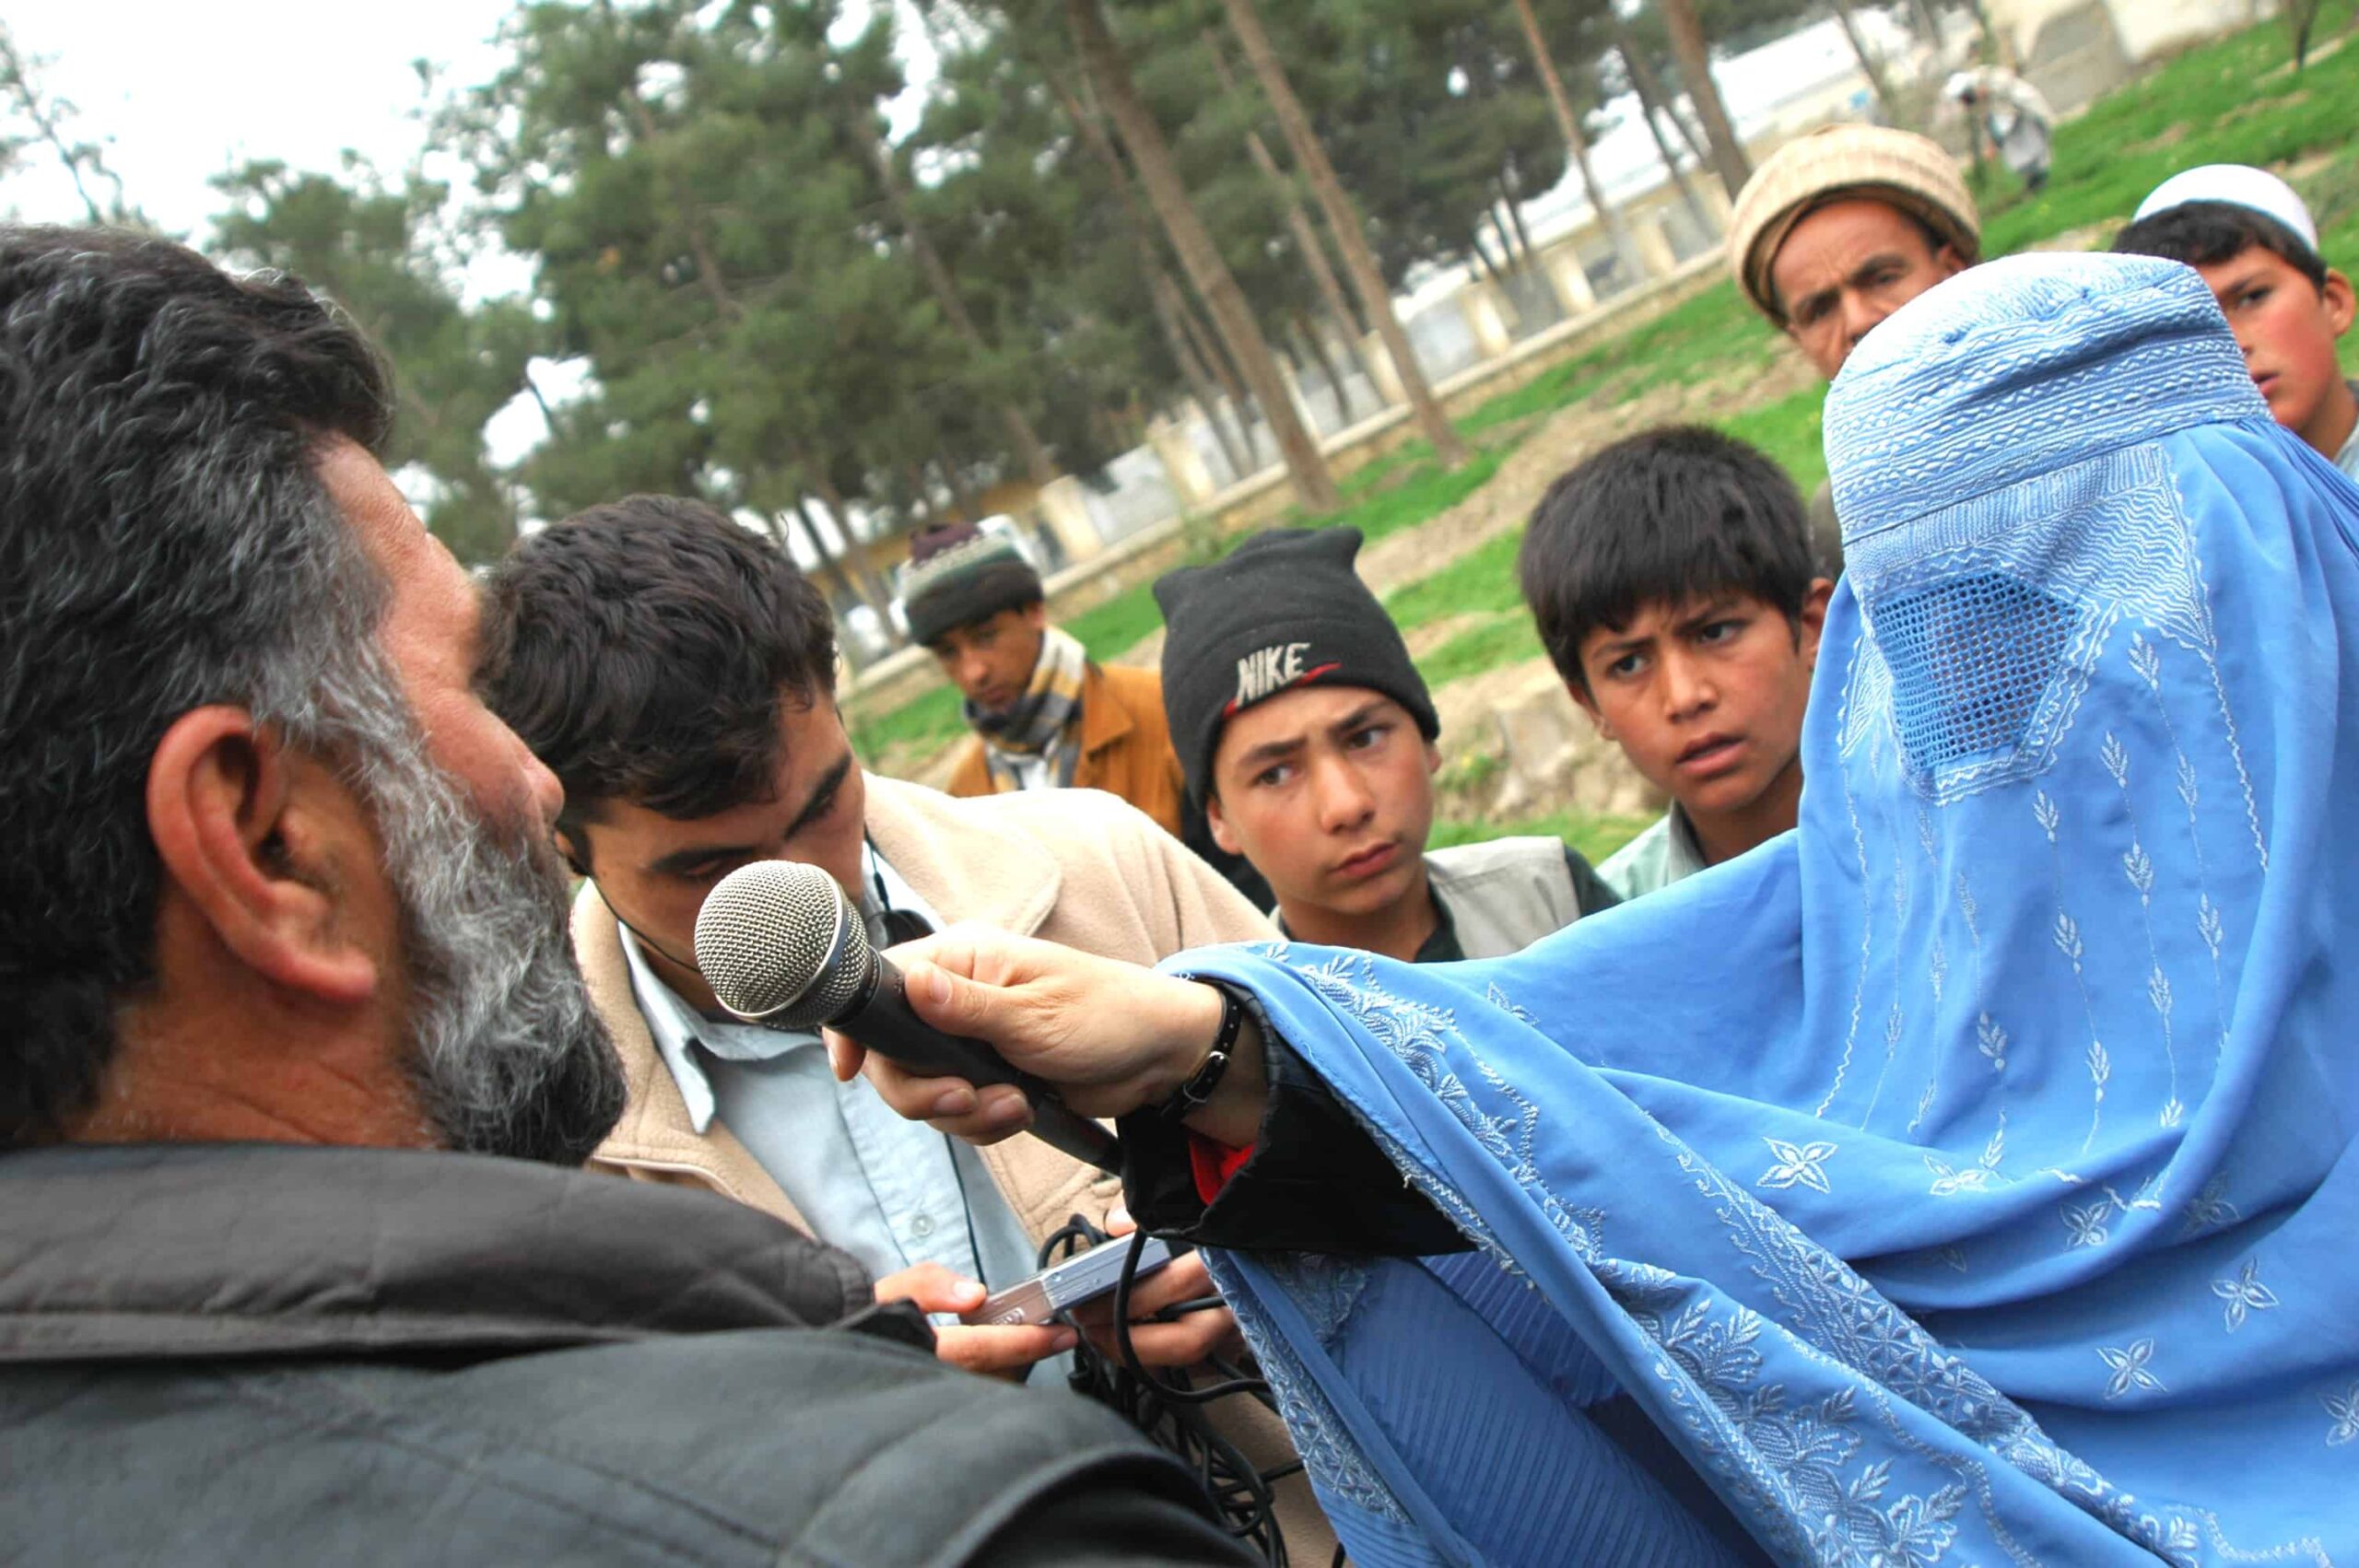 An Afghan woman in a burqa interviews some men